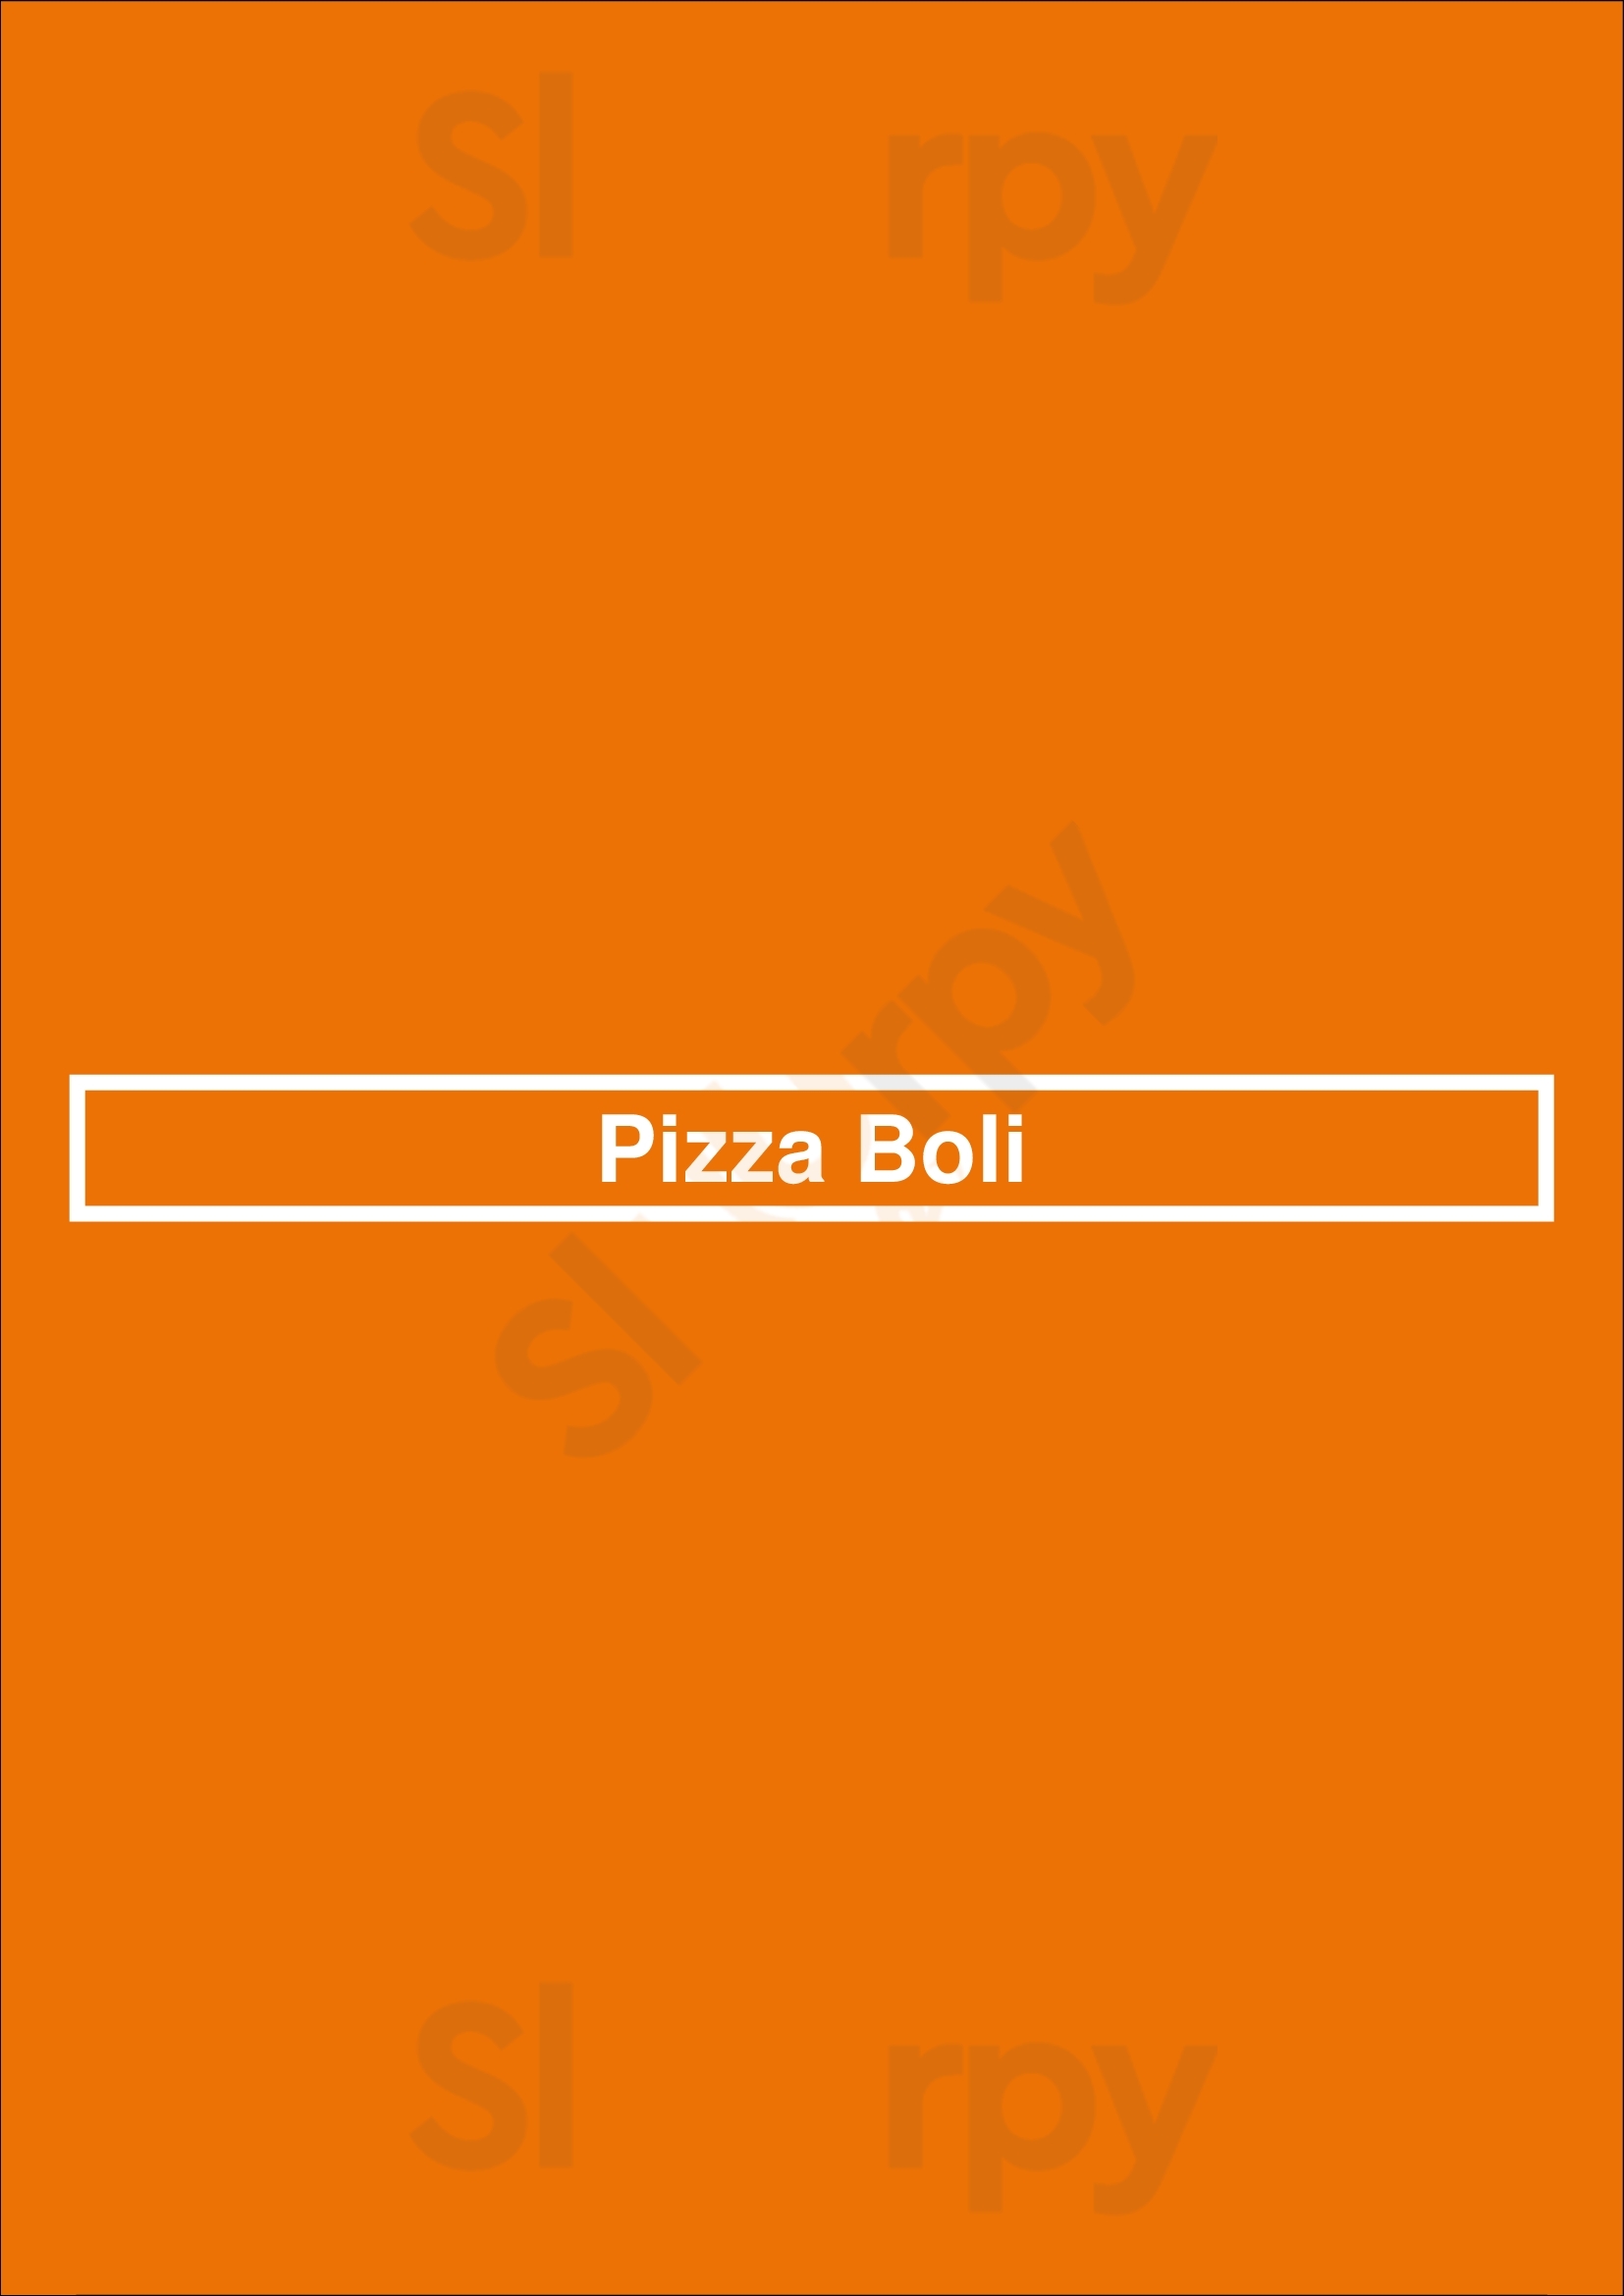 Pizza Boli's - Frankford / Juniata Philadelphia Menu - 1